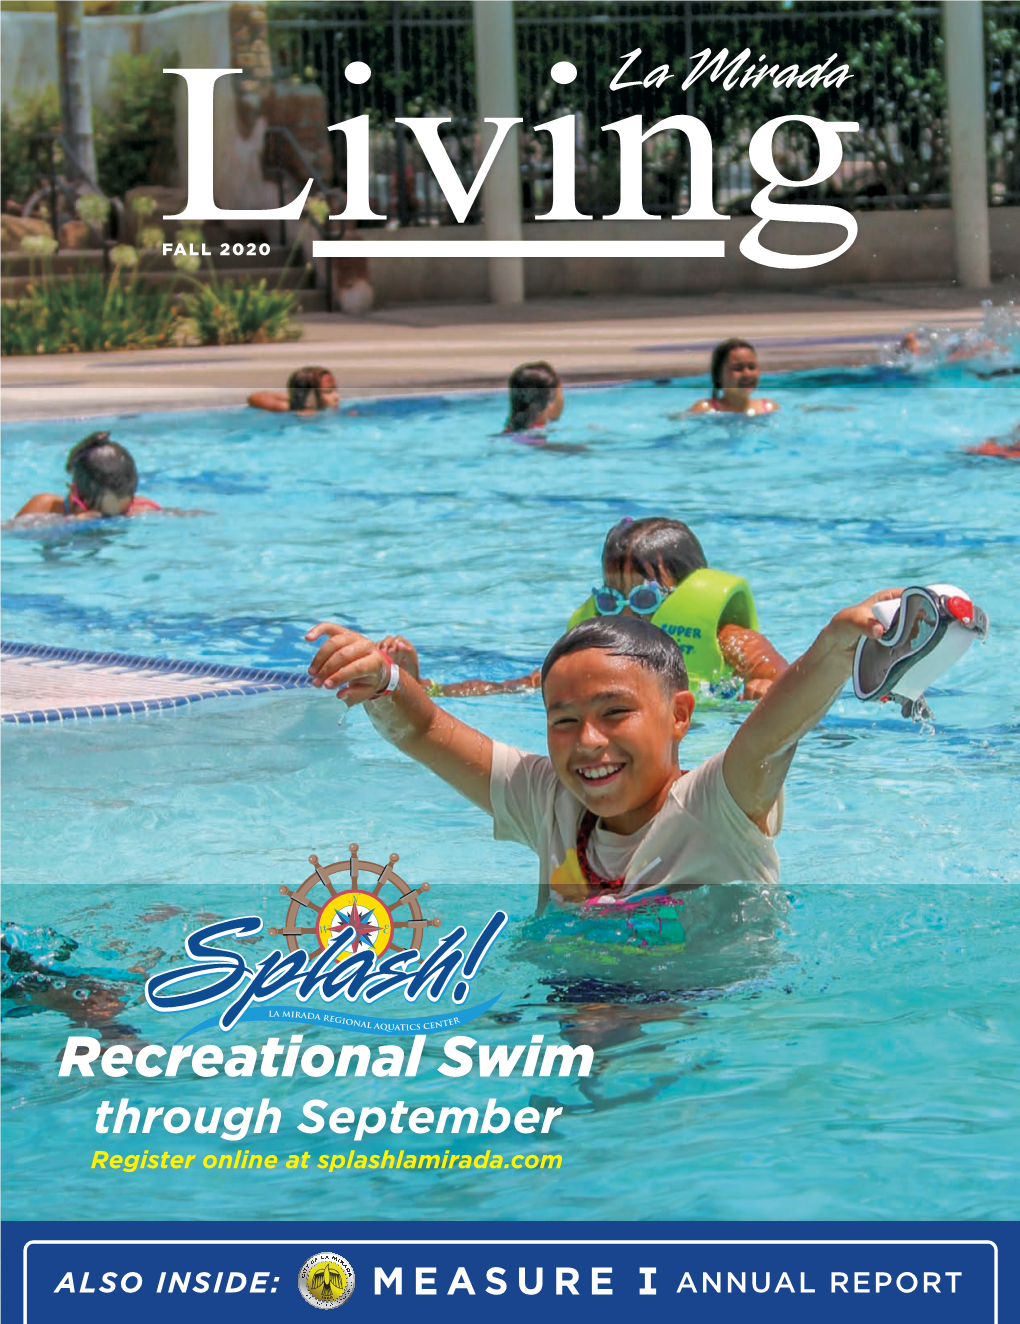 Recreational Swim Through September Register Online at Splashlamirada.Com